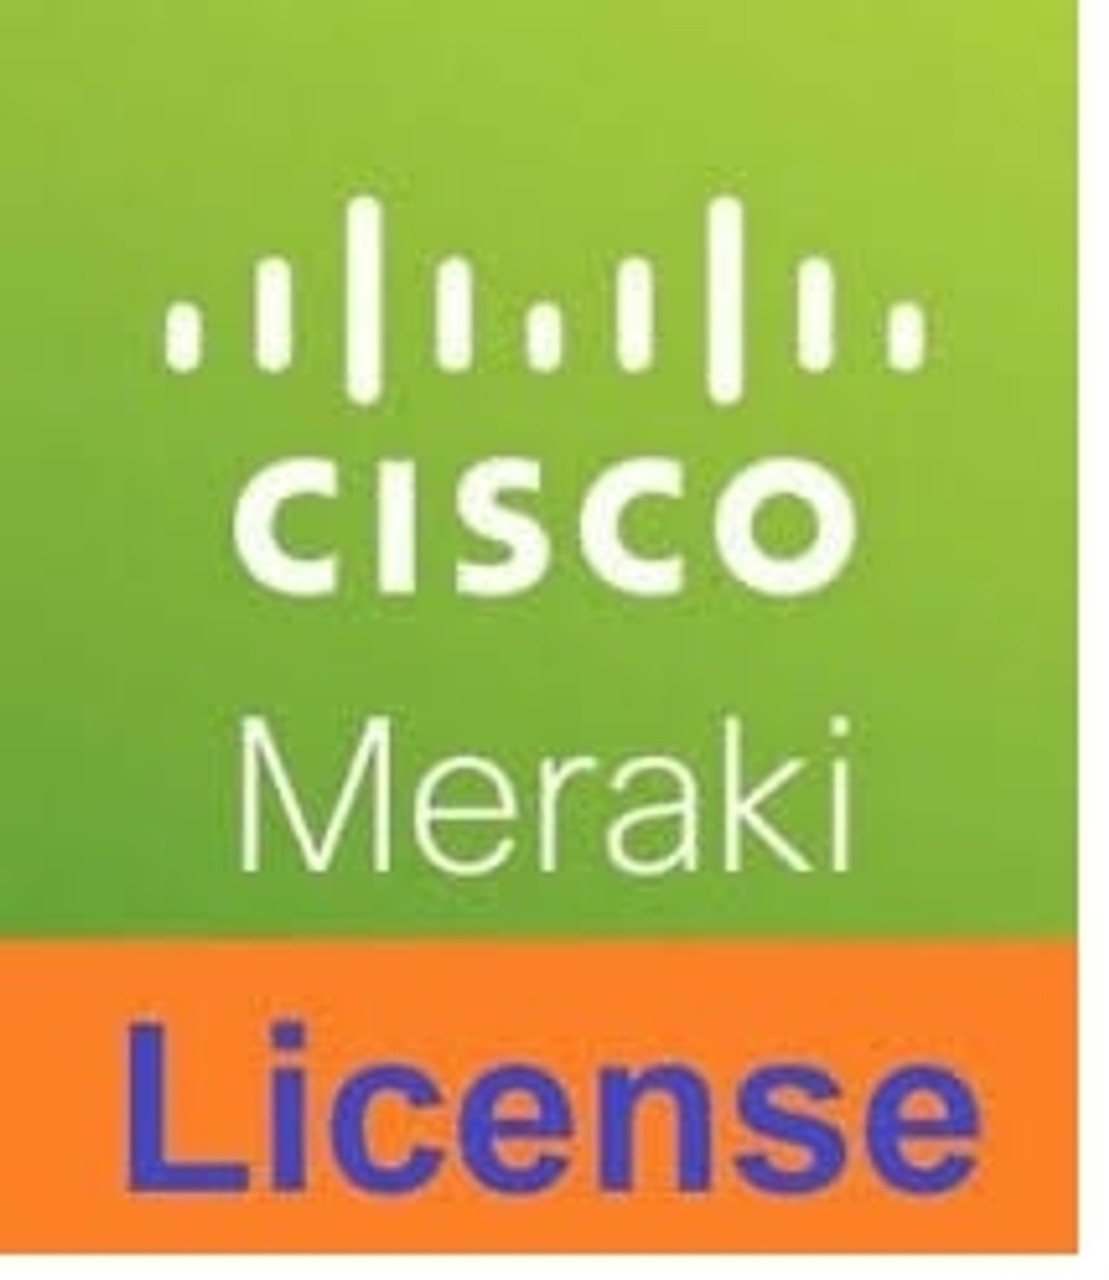 EOS Meraki MS320-48 Enterprise License and Support, 7 Year